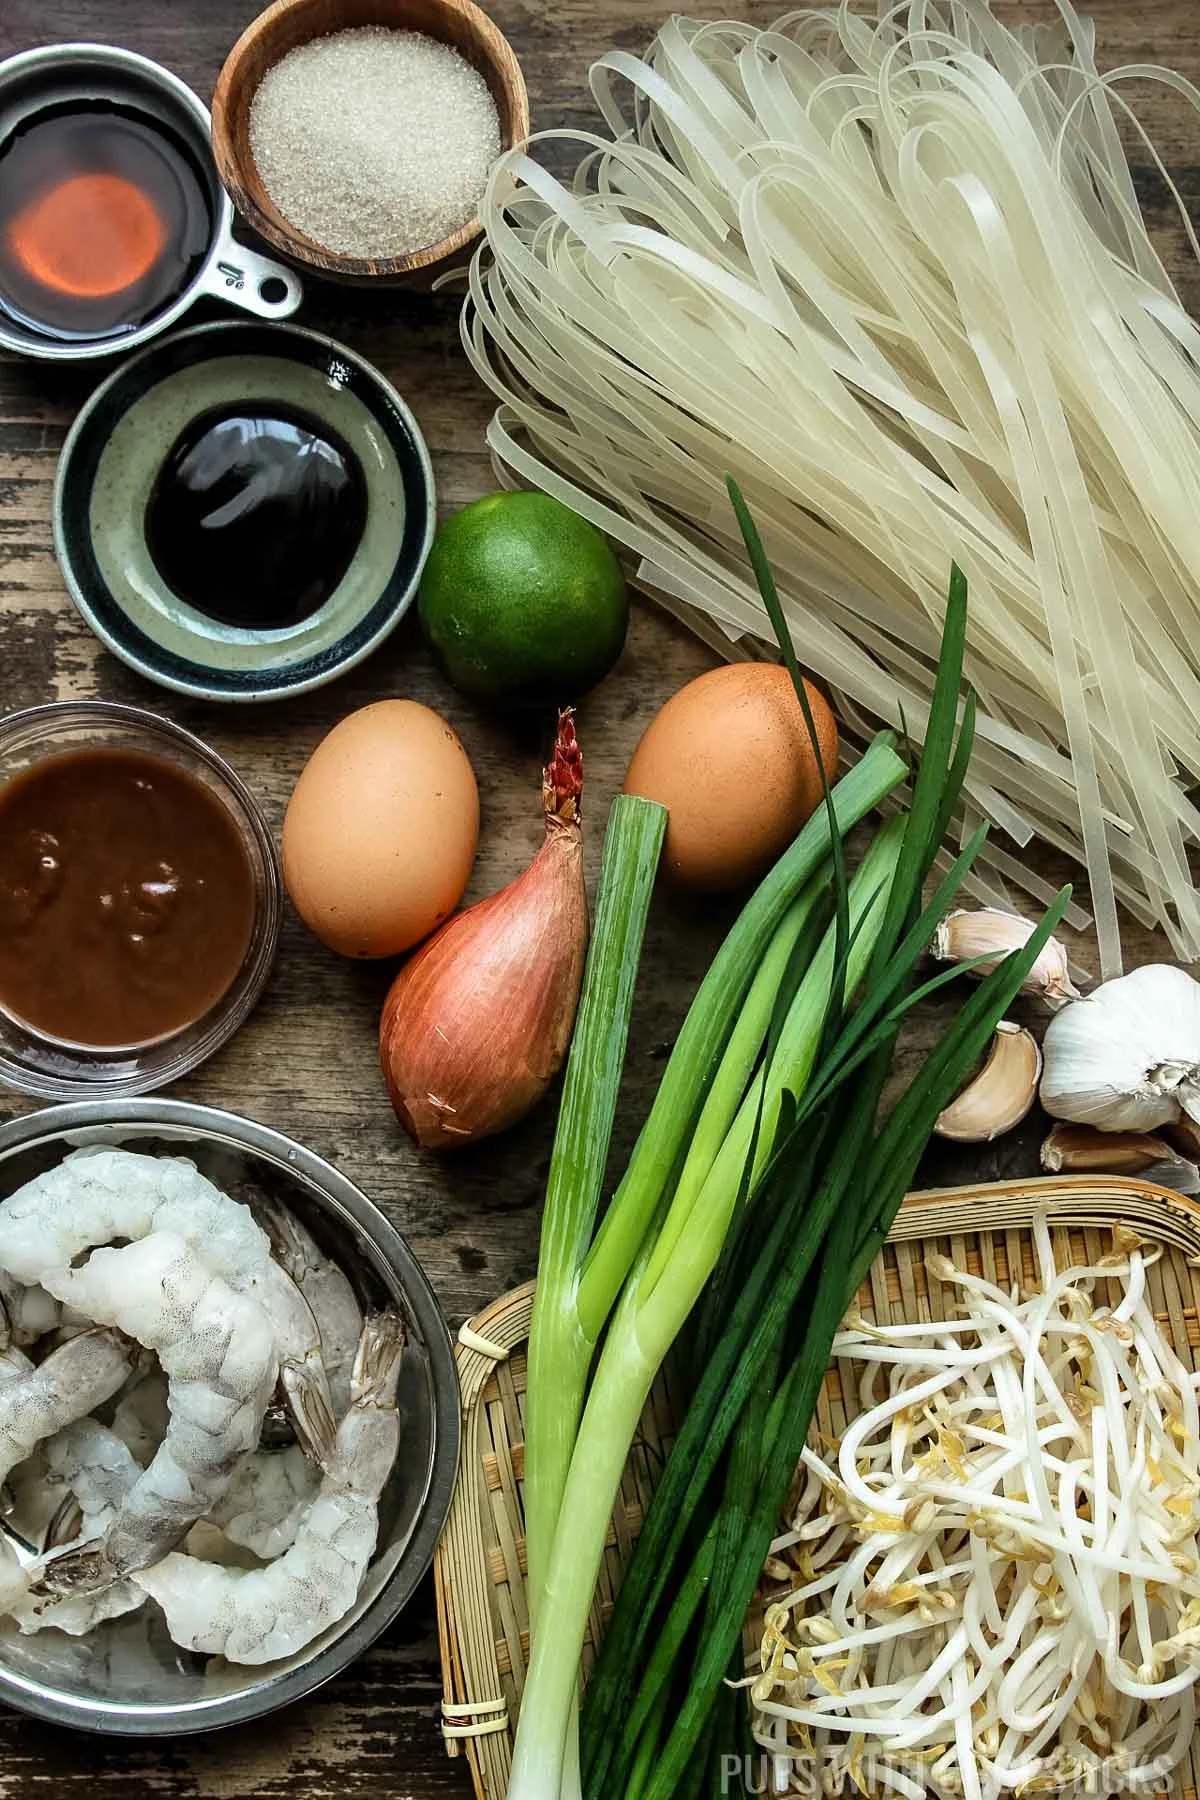 Ingredients mise en place for pad thai (rice noodles, tamarind paste, fish sauce, sugar, eggs, limes, shrimp, bean sprouts)